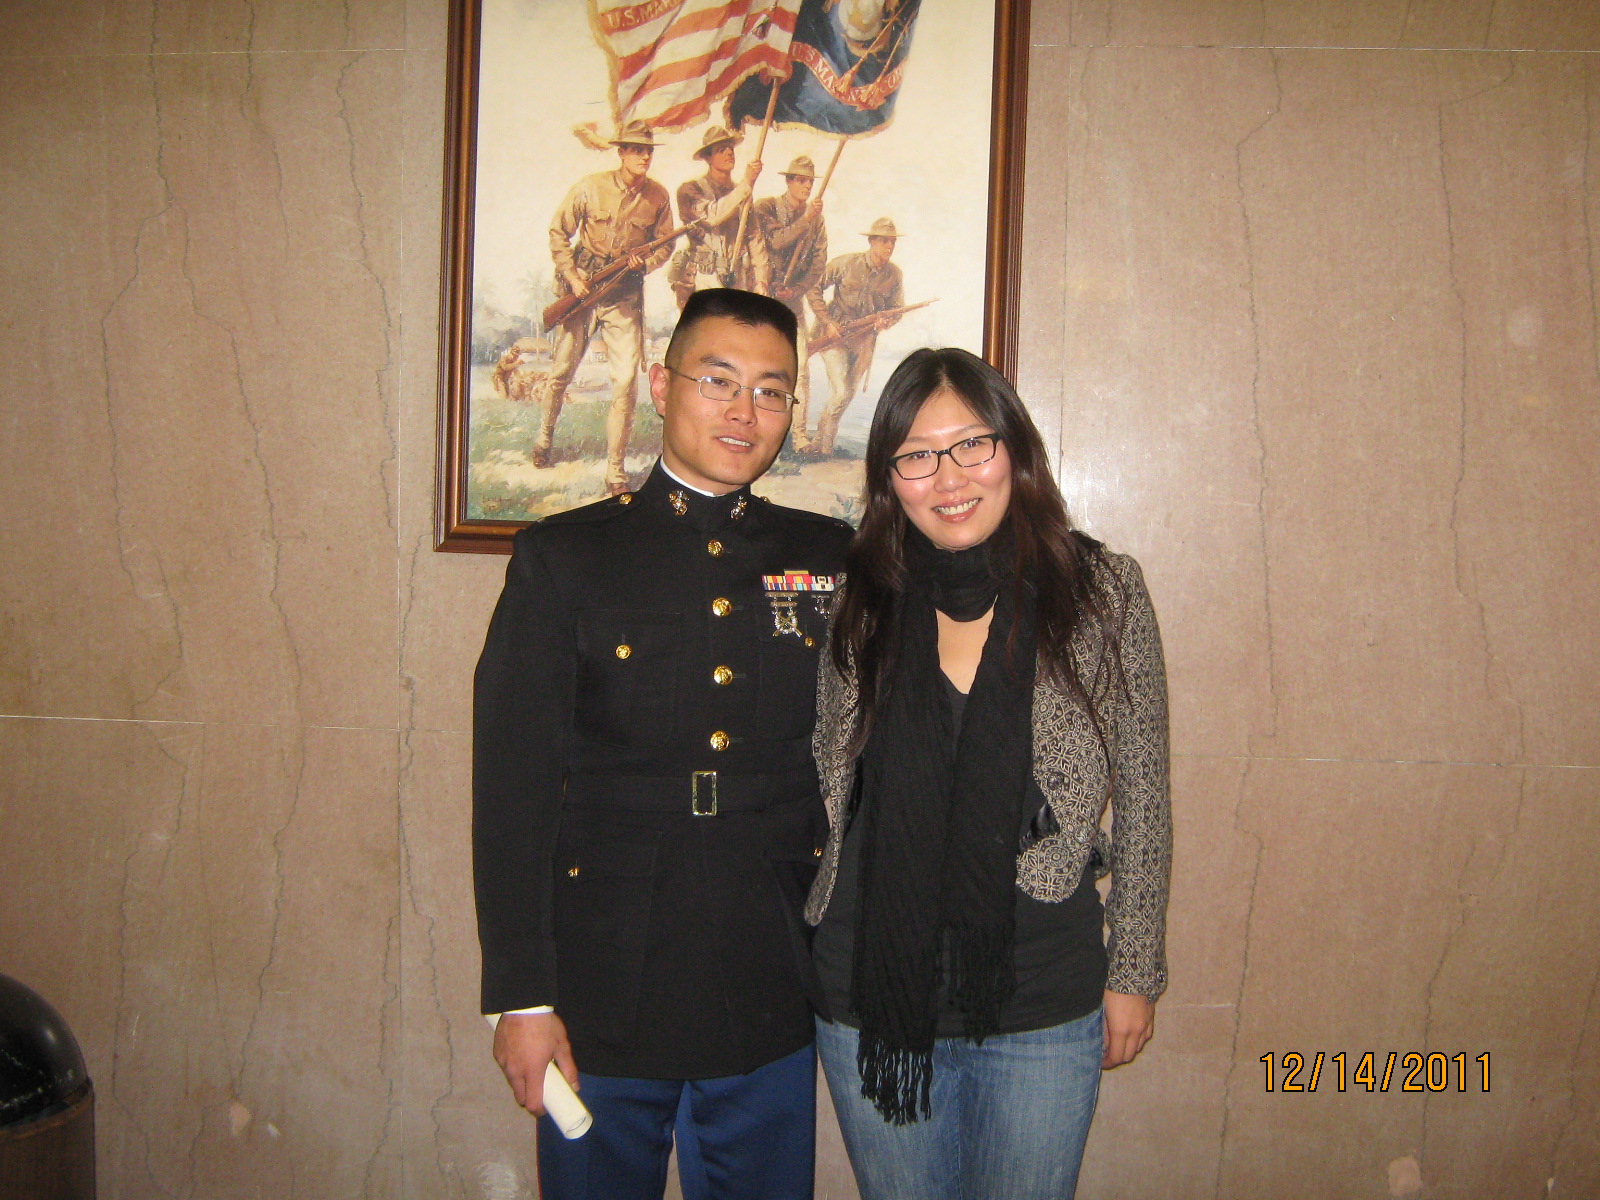 IMG_1803.JPG : Dec 14, 2011 Jason's Graduation at Quantico Marine Base